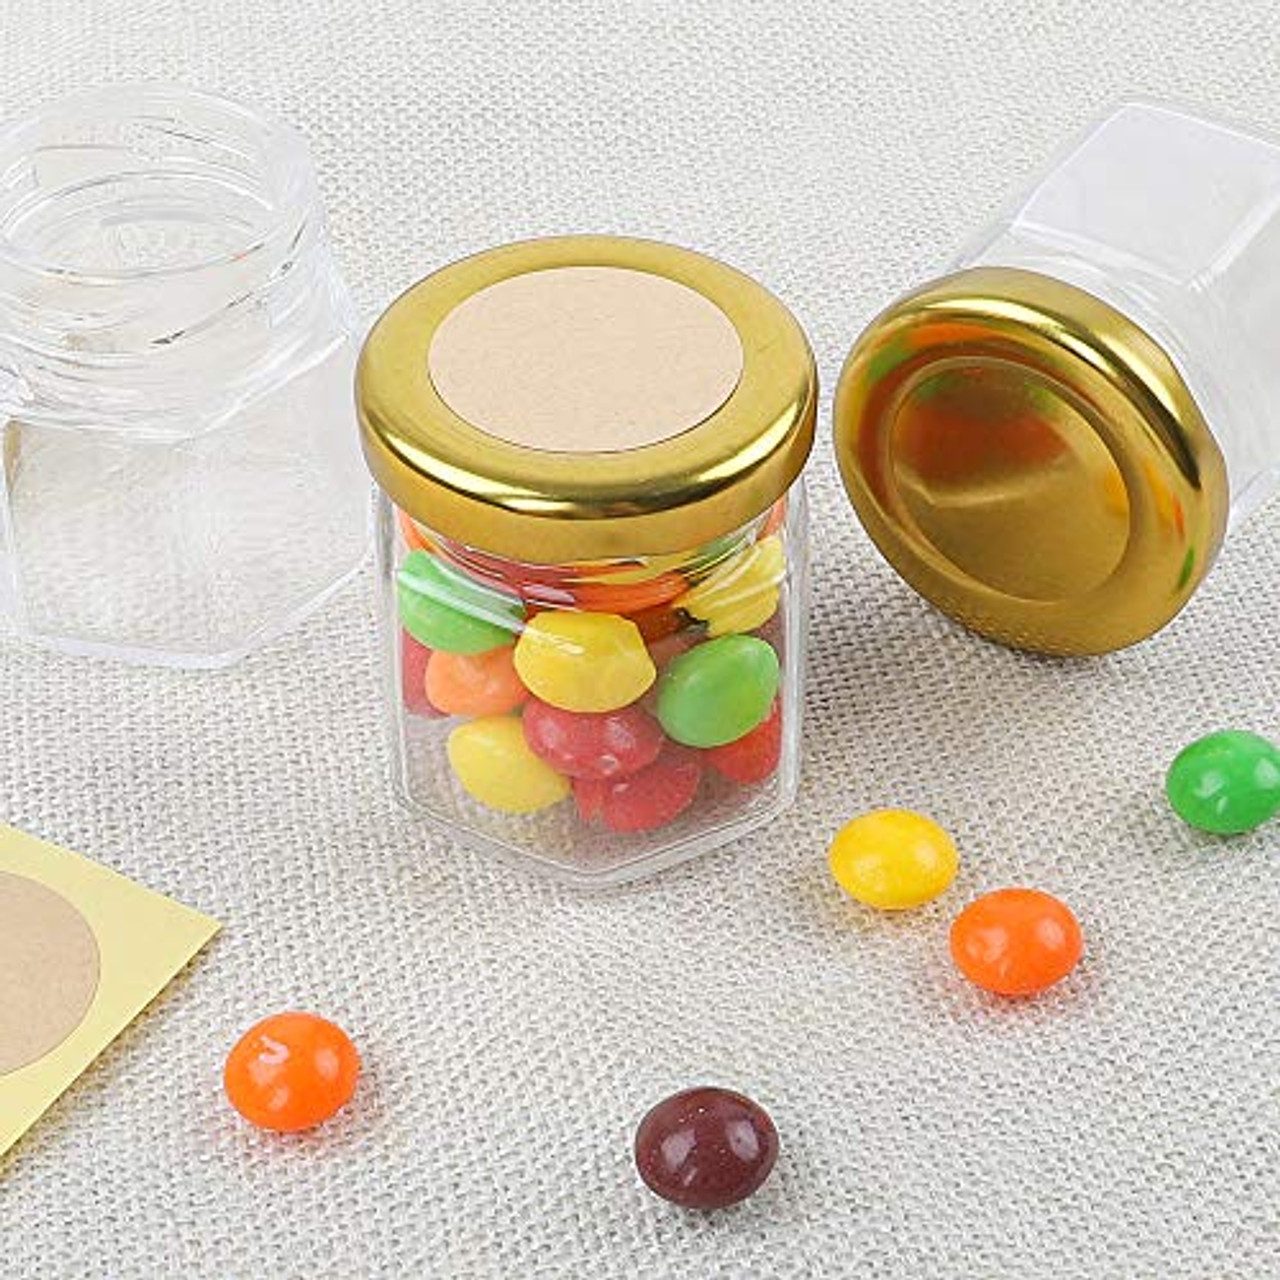 Superlele 30pcs 1.5oz Hexagon Mini Glass Jars with Gold Lids